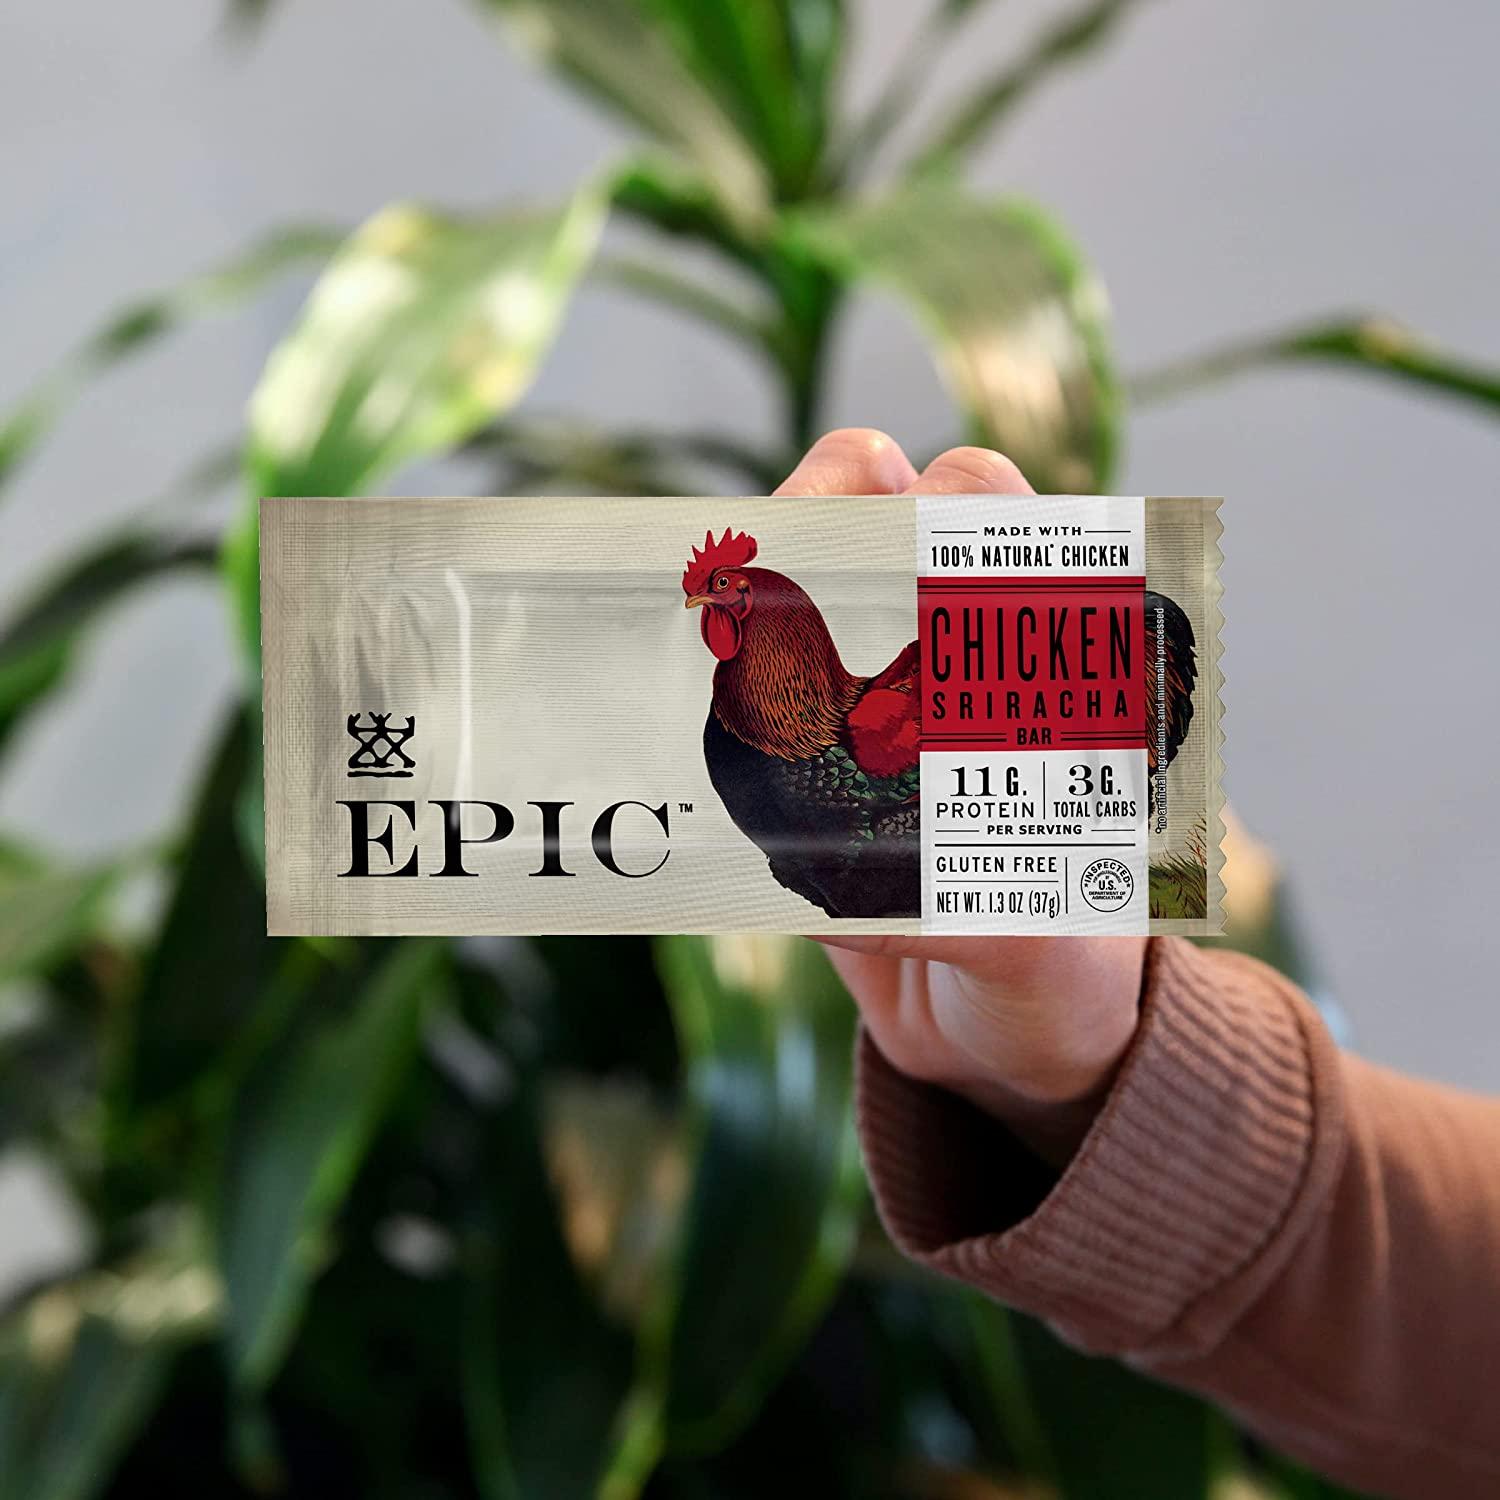 EPIC Chicken Sriracha Protein Bars, Whole30, Keto Friendly